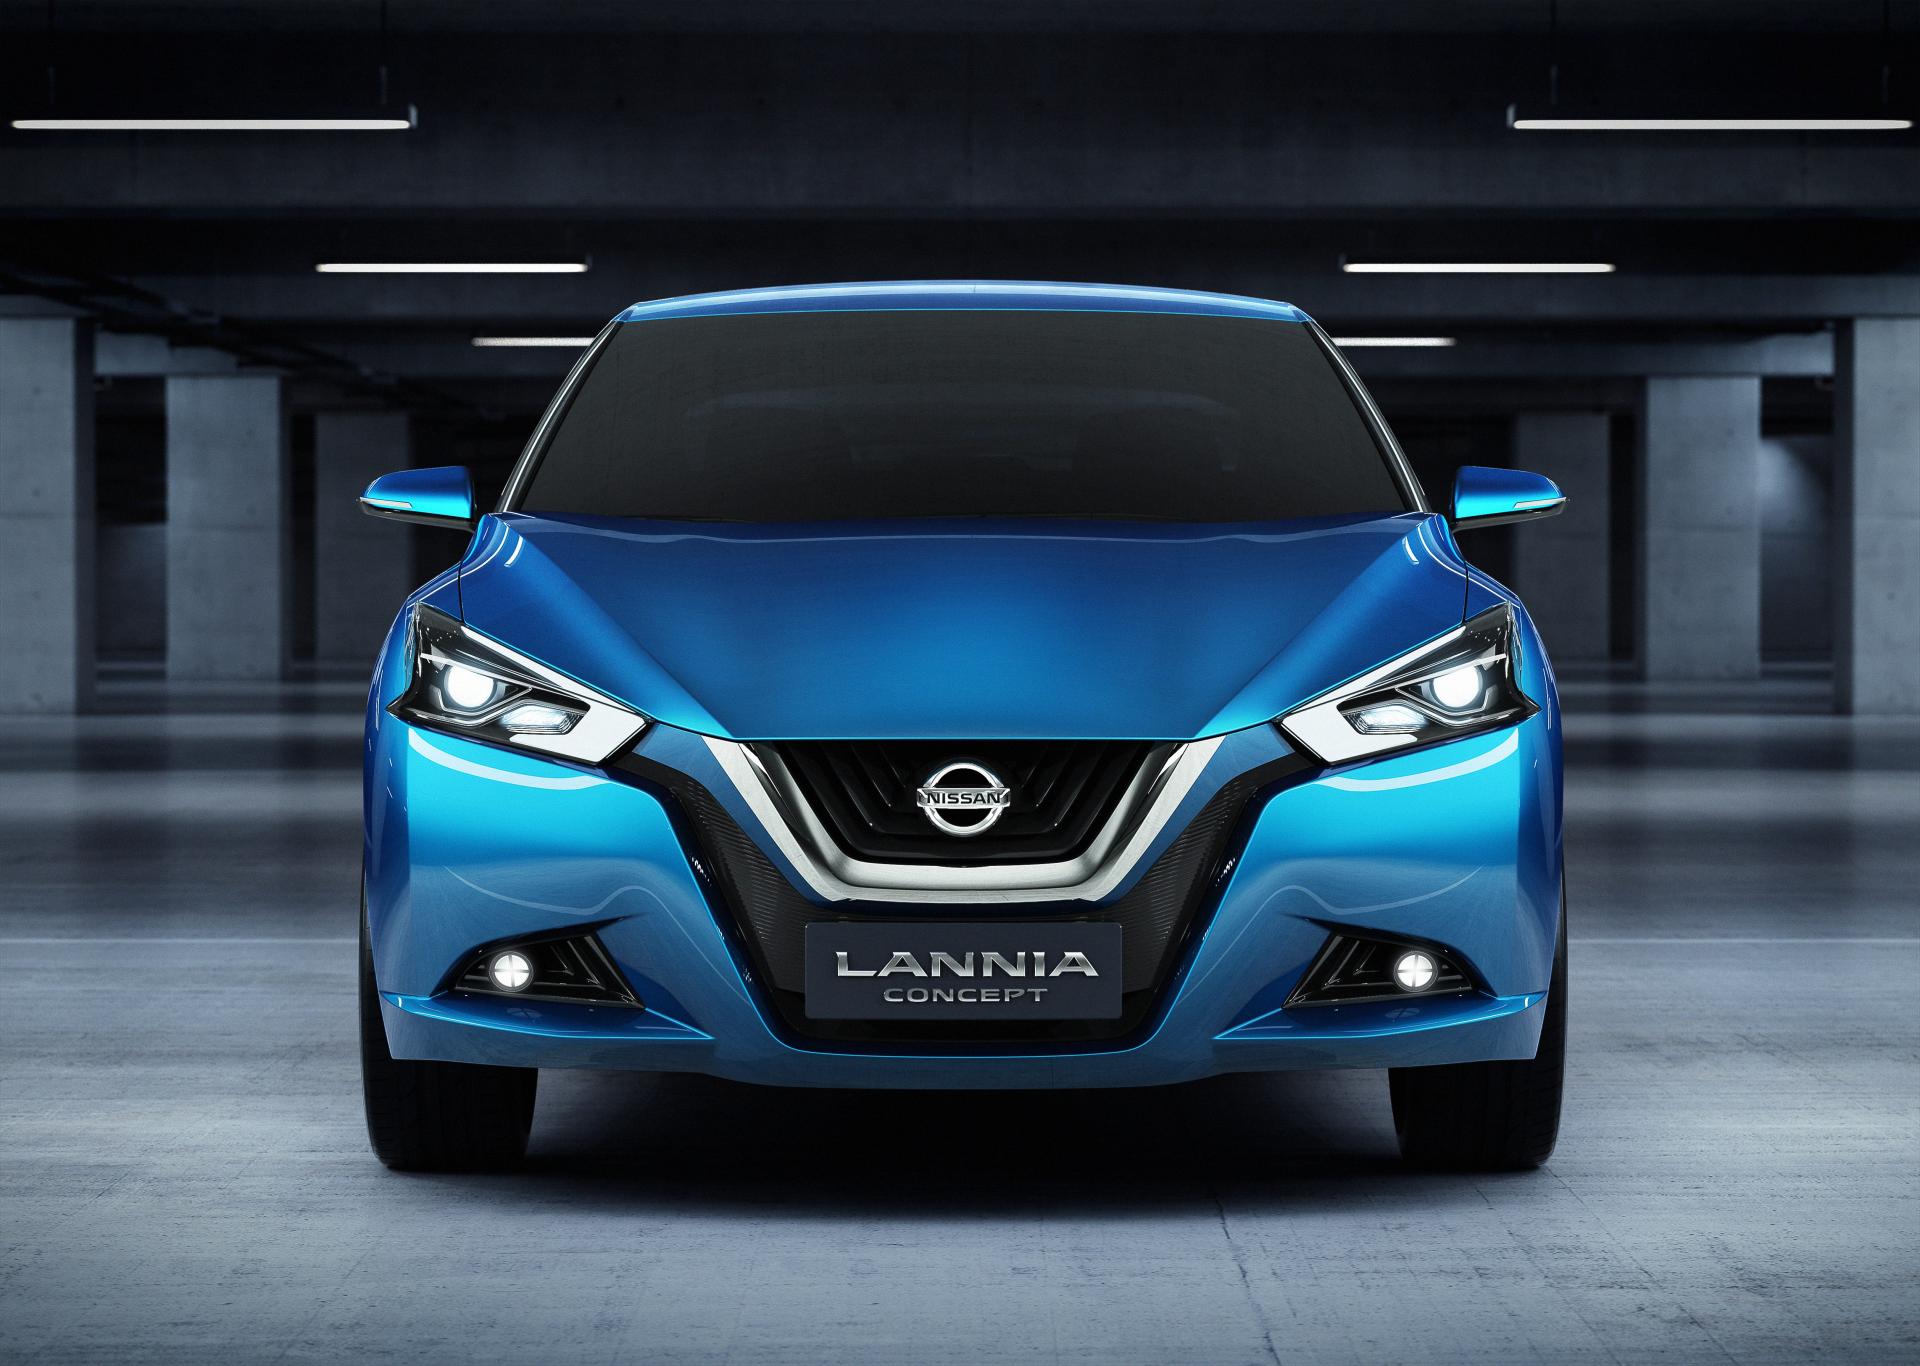 2014 Nissan Lannia Concept Pics, Vehicles Collection